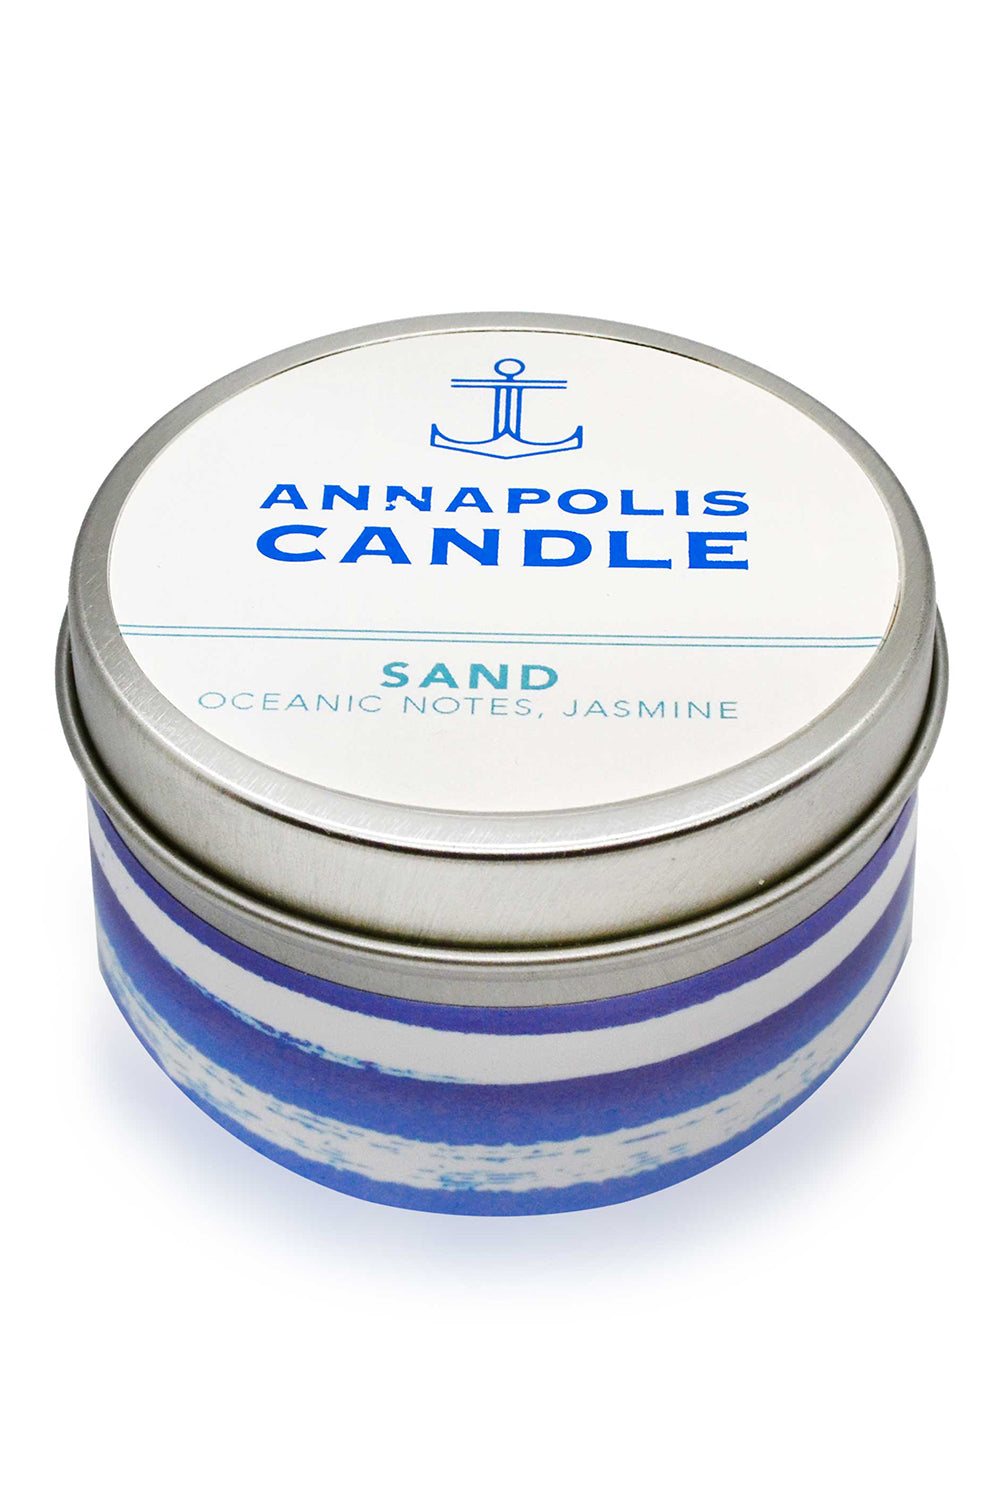 Tin Annapolis Candle - Sand